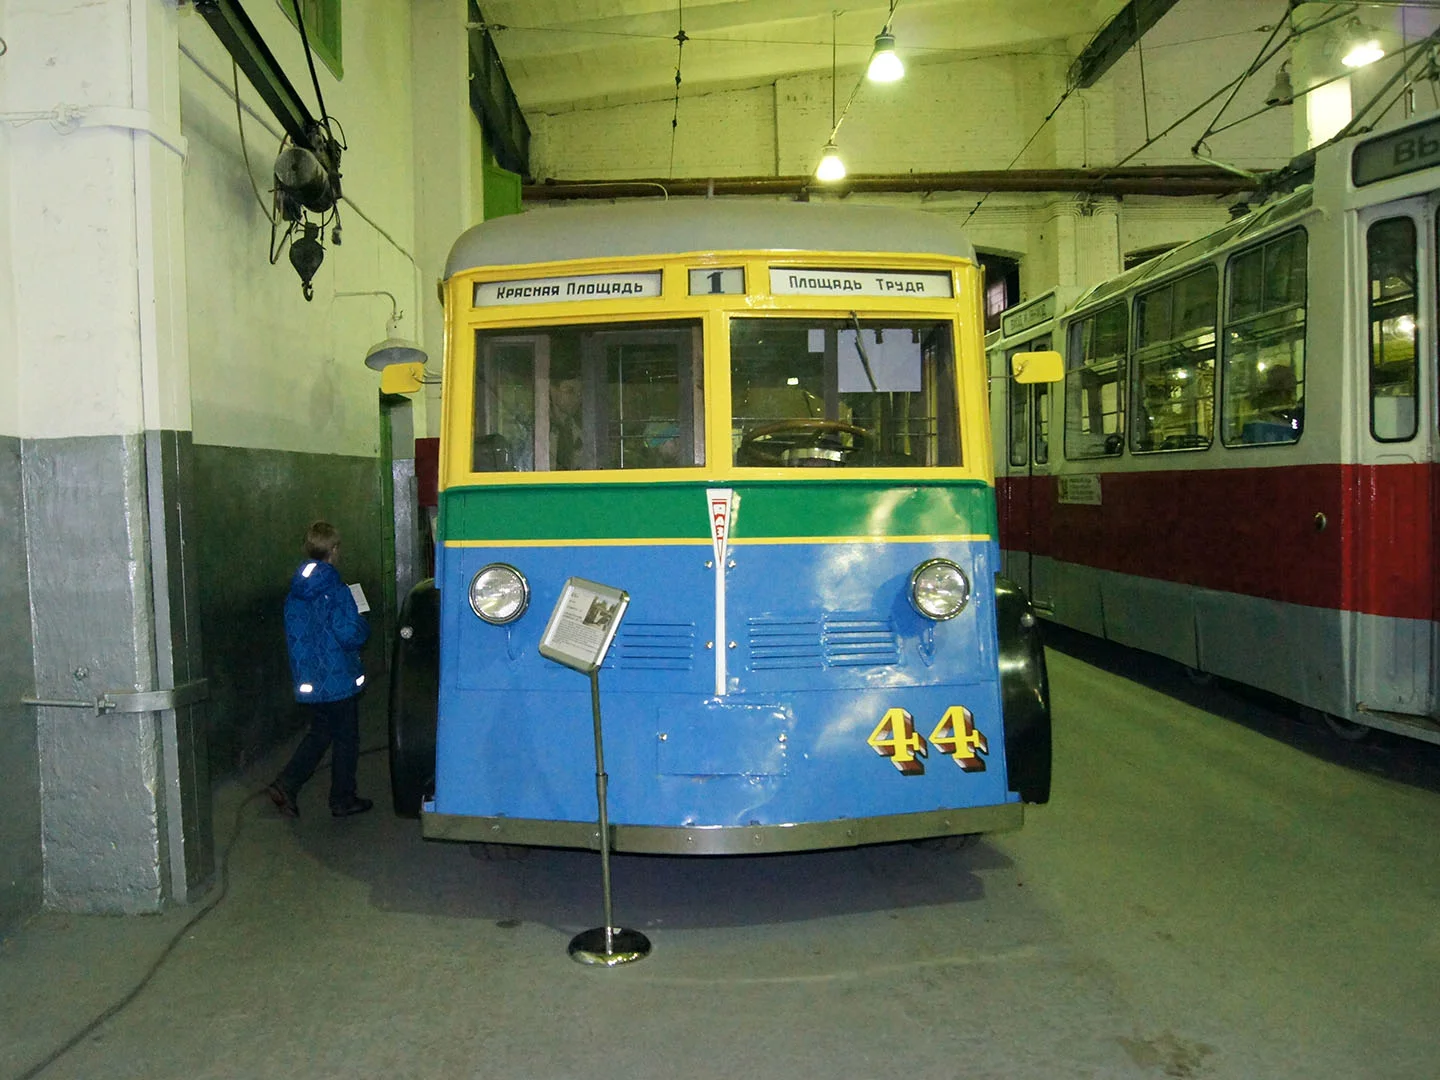 Музей электротранспорта Петербурга, старый троллейбус